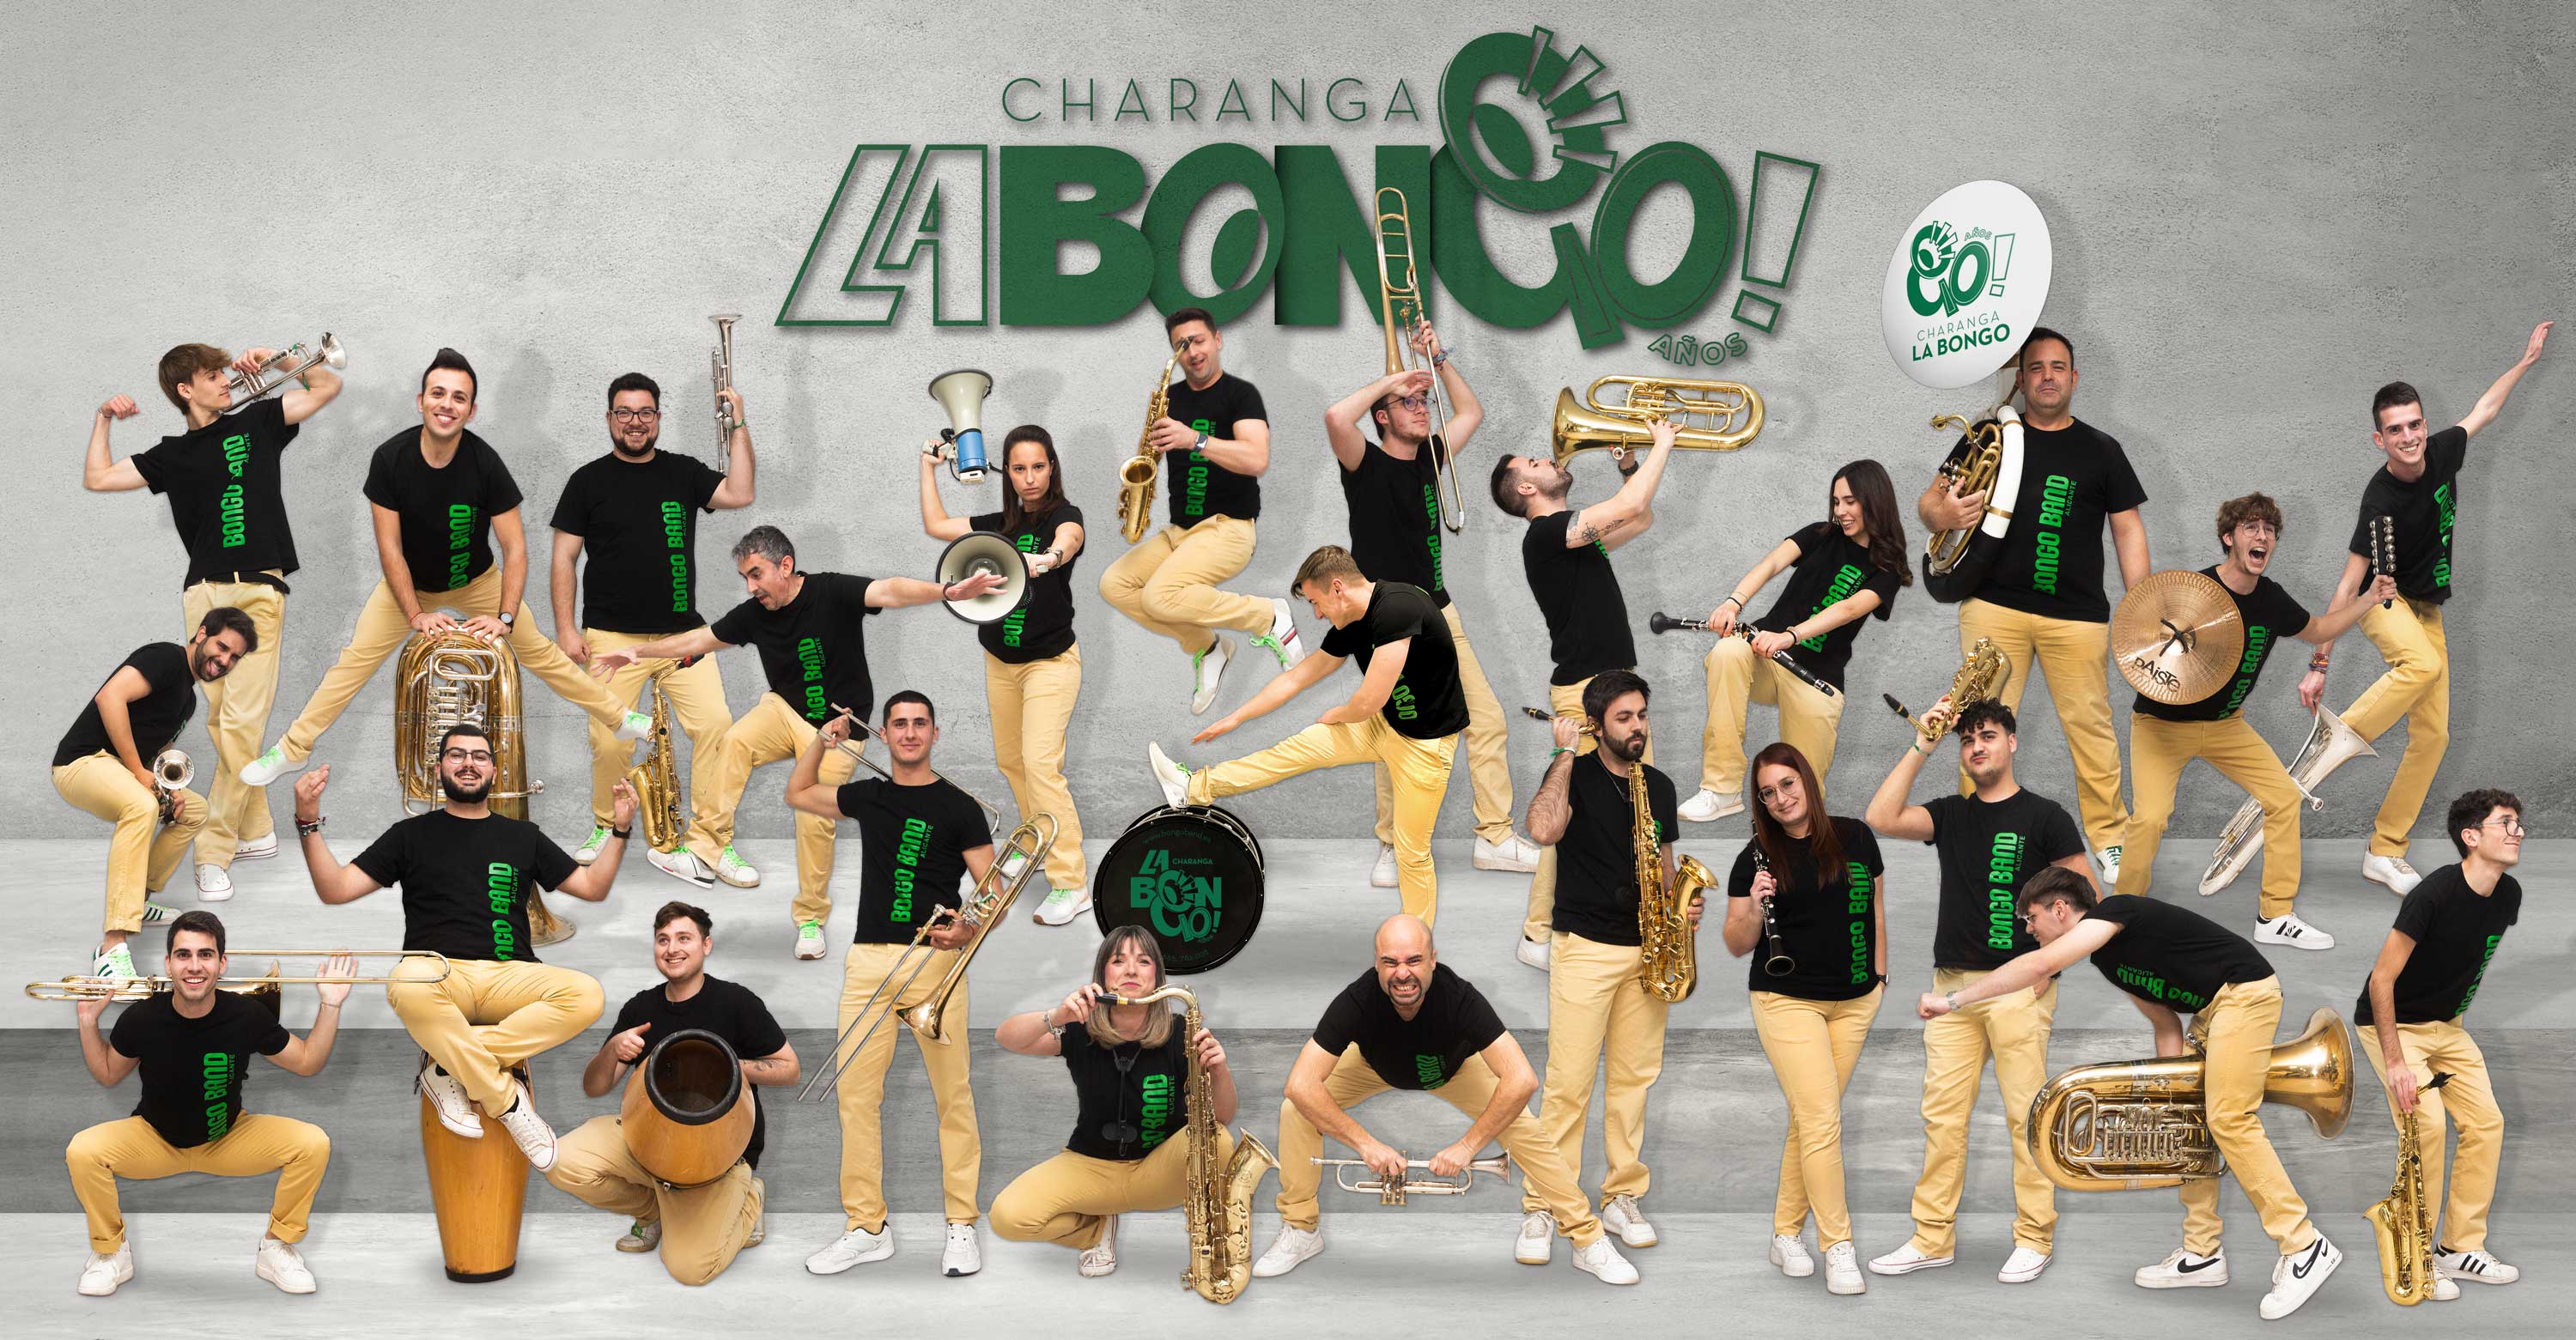 Bongo Band